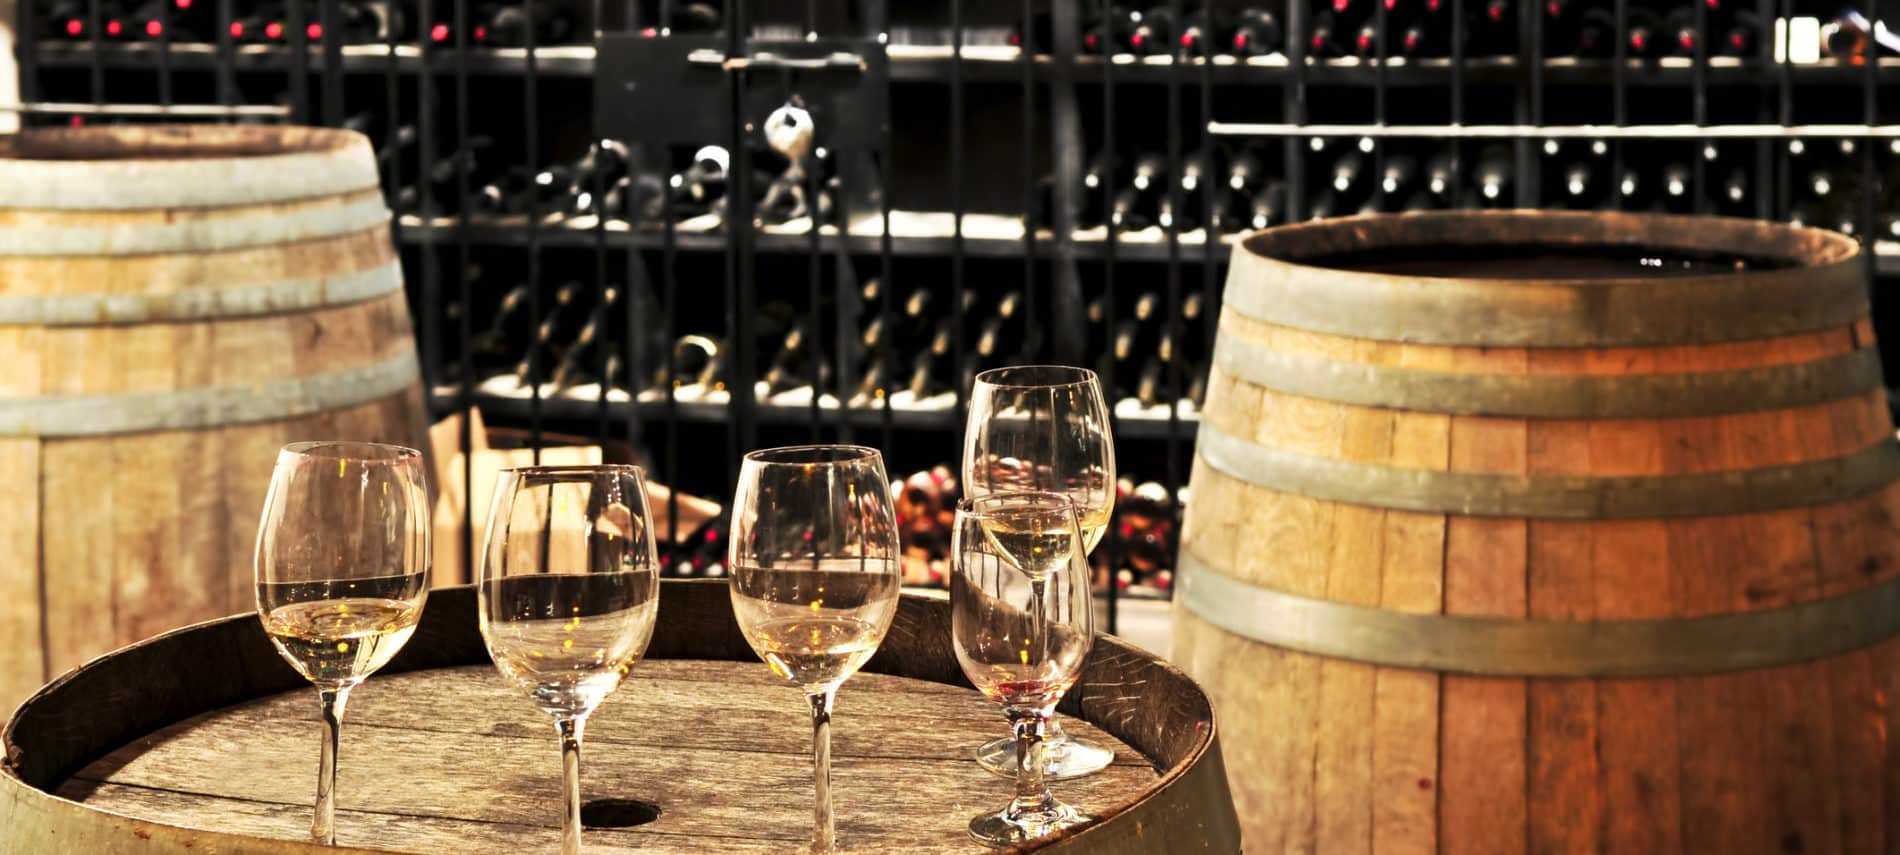 5 wine glasses with white wine on top of wine barrel, 1 wine barrel on each side, wine racks behind full of wine bottles